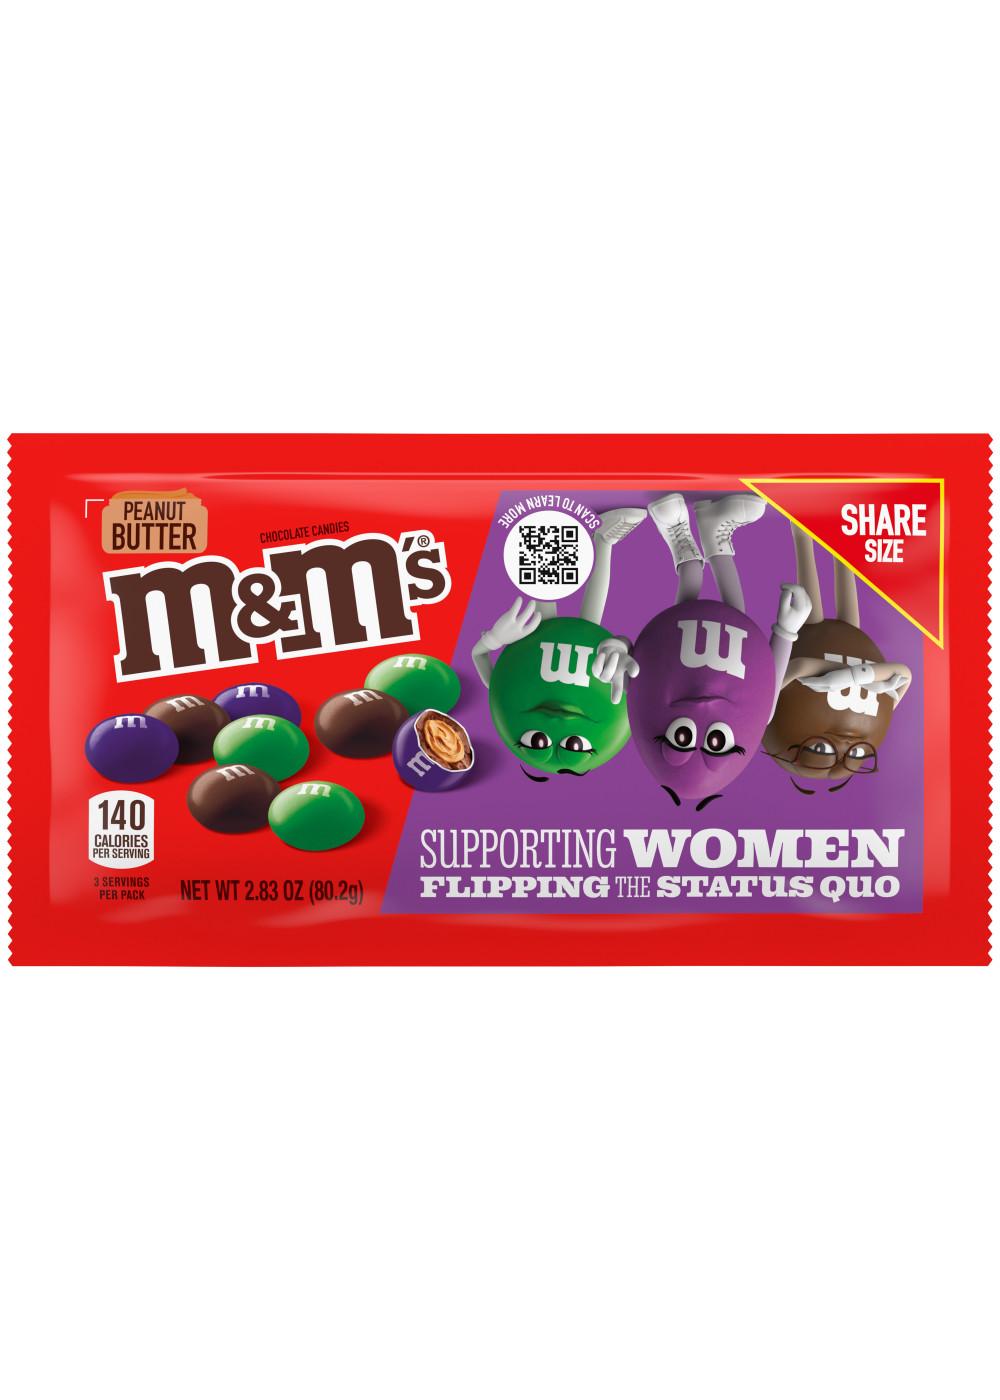 M&M'S Peanut Milk Chocolate Fun Size Candy Packs - Shop Candy at H-E-B